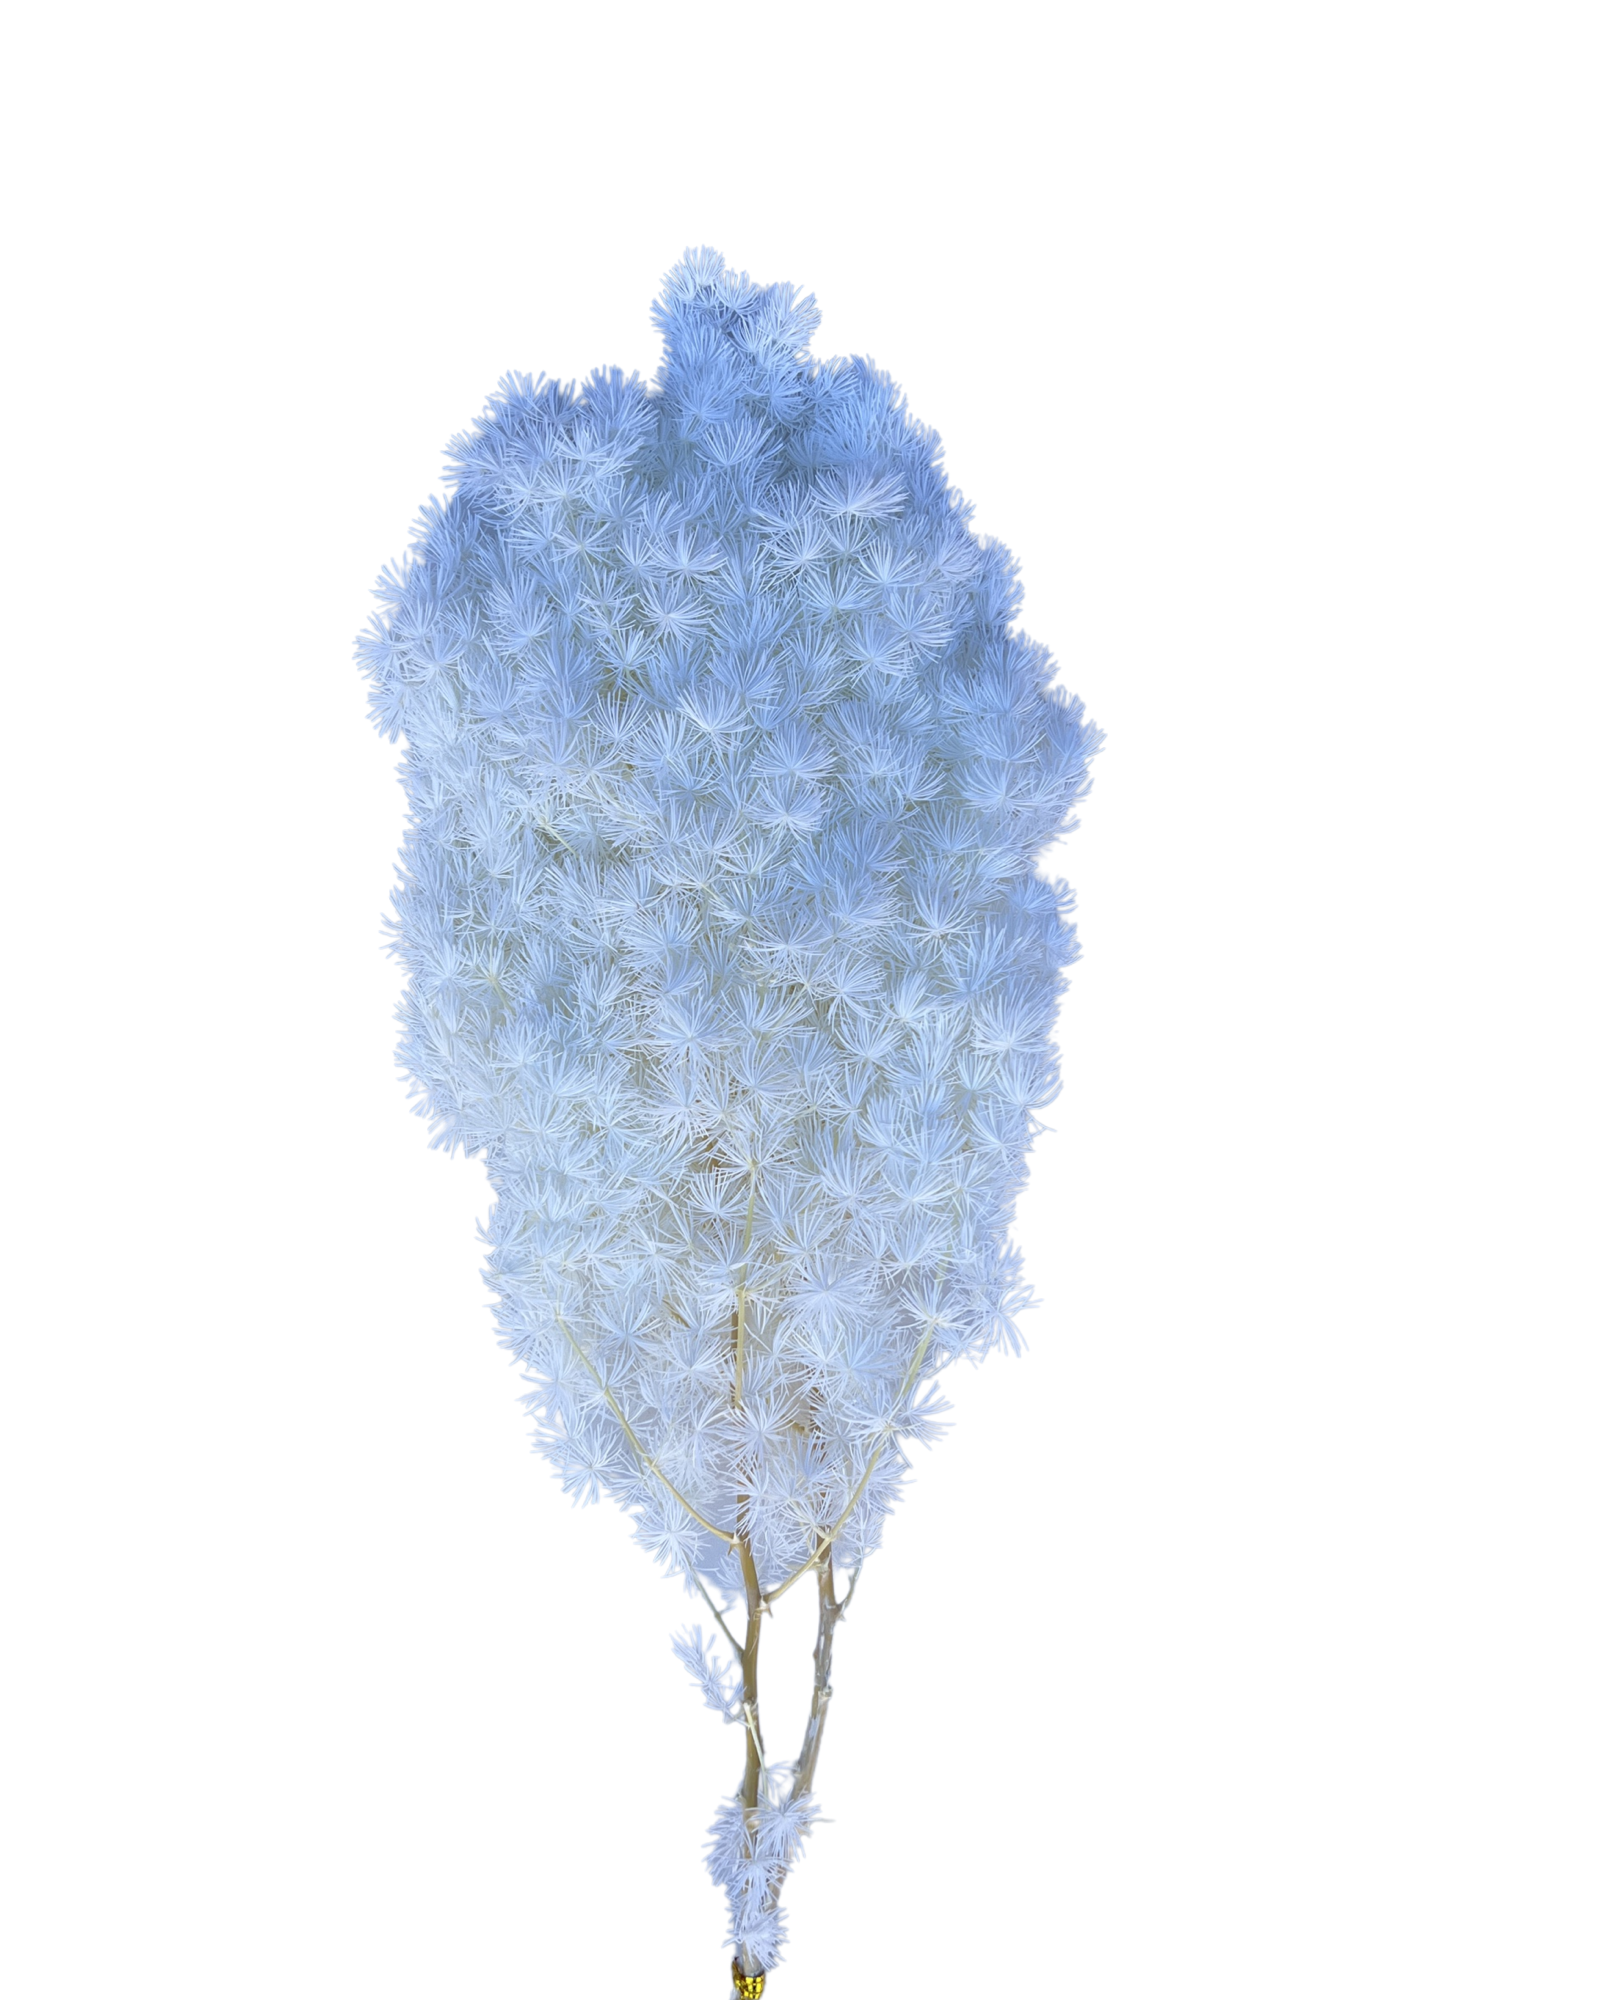 Ming fern(ASPARAGUS MYRIOCLADUS) - White (pure)